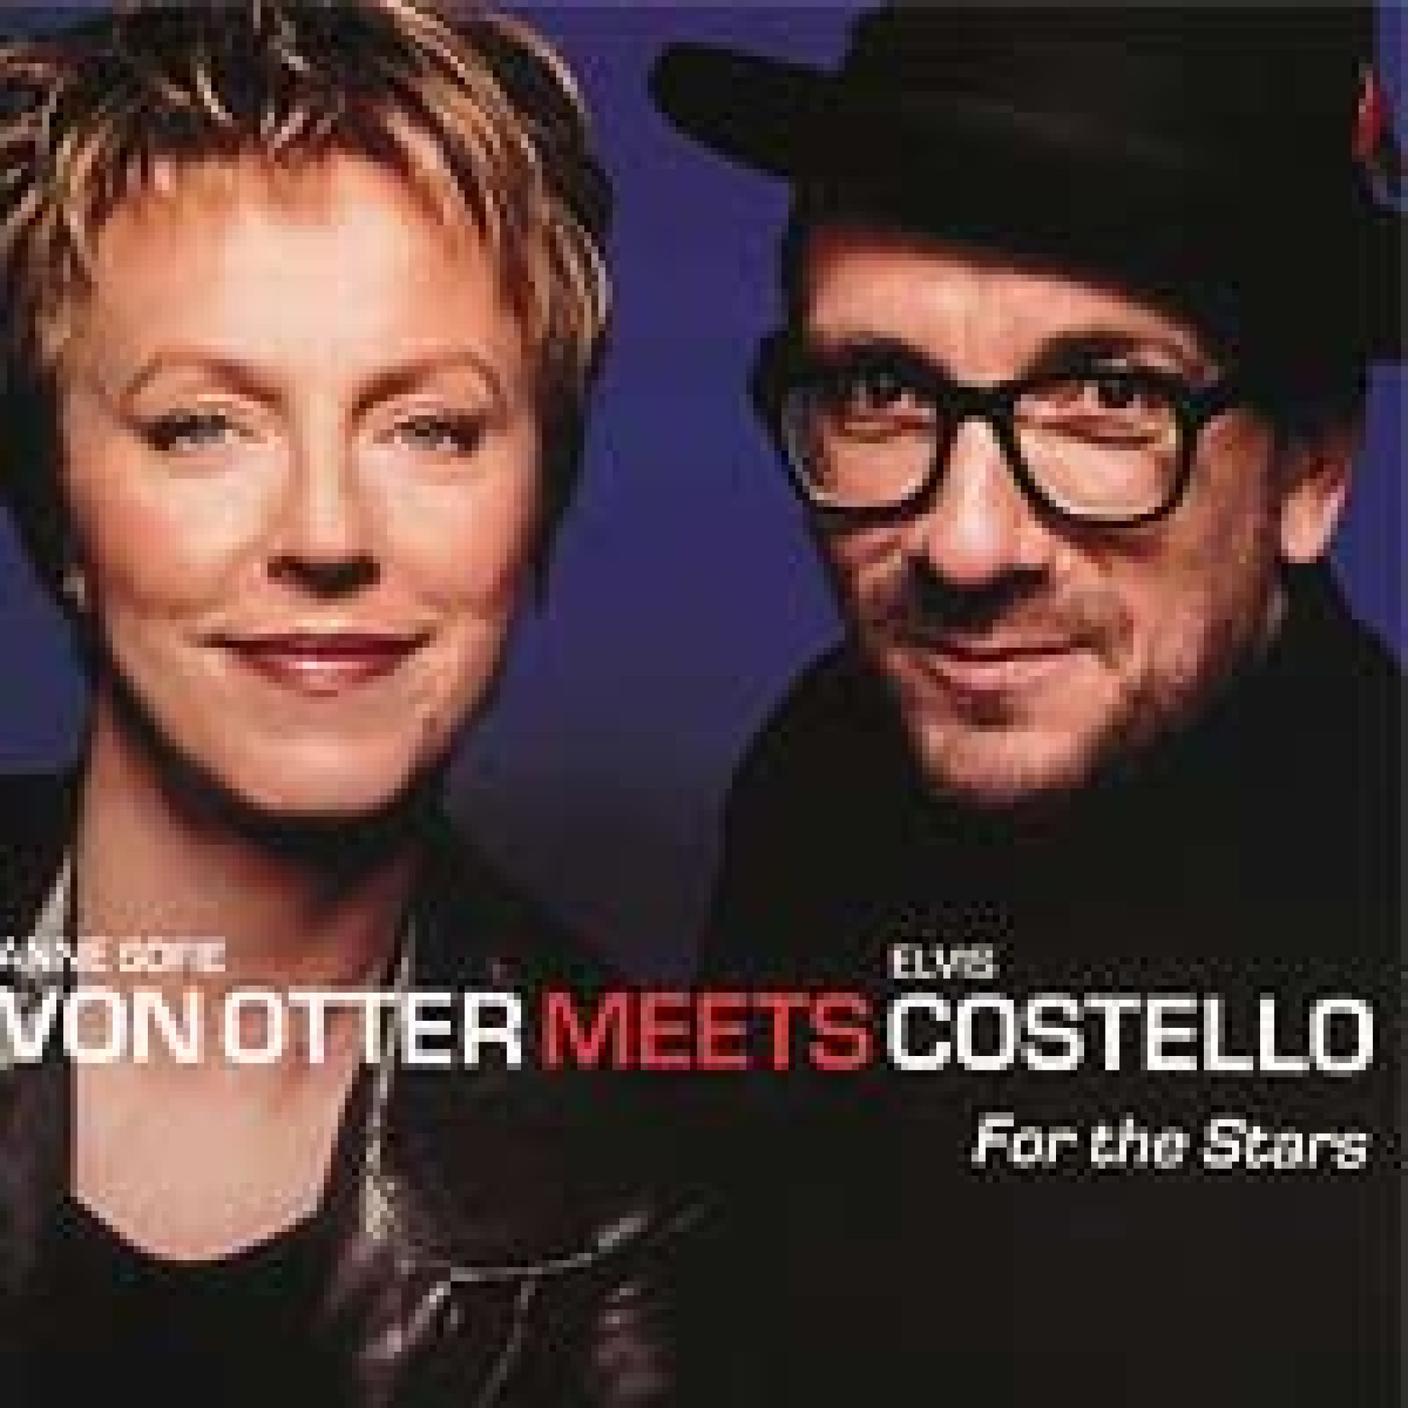 "Shamed into love" di Anne Sofie von Otter & Elvis Costello, Deutsche Grammophon (dettaglio di copertina)